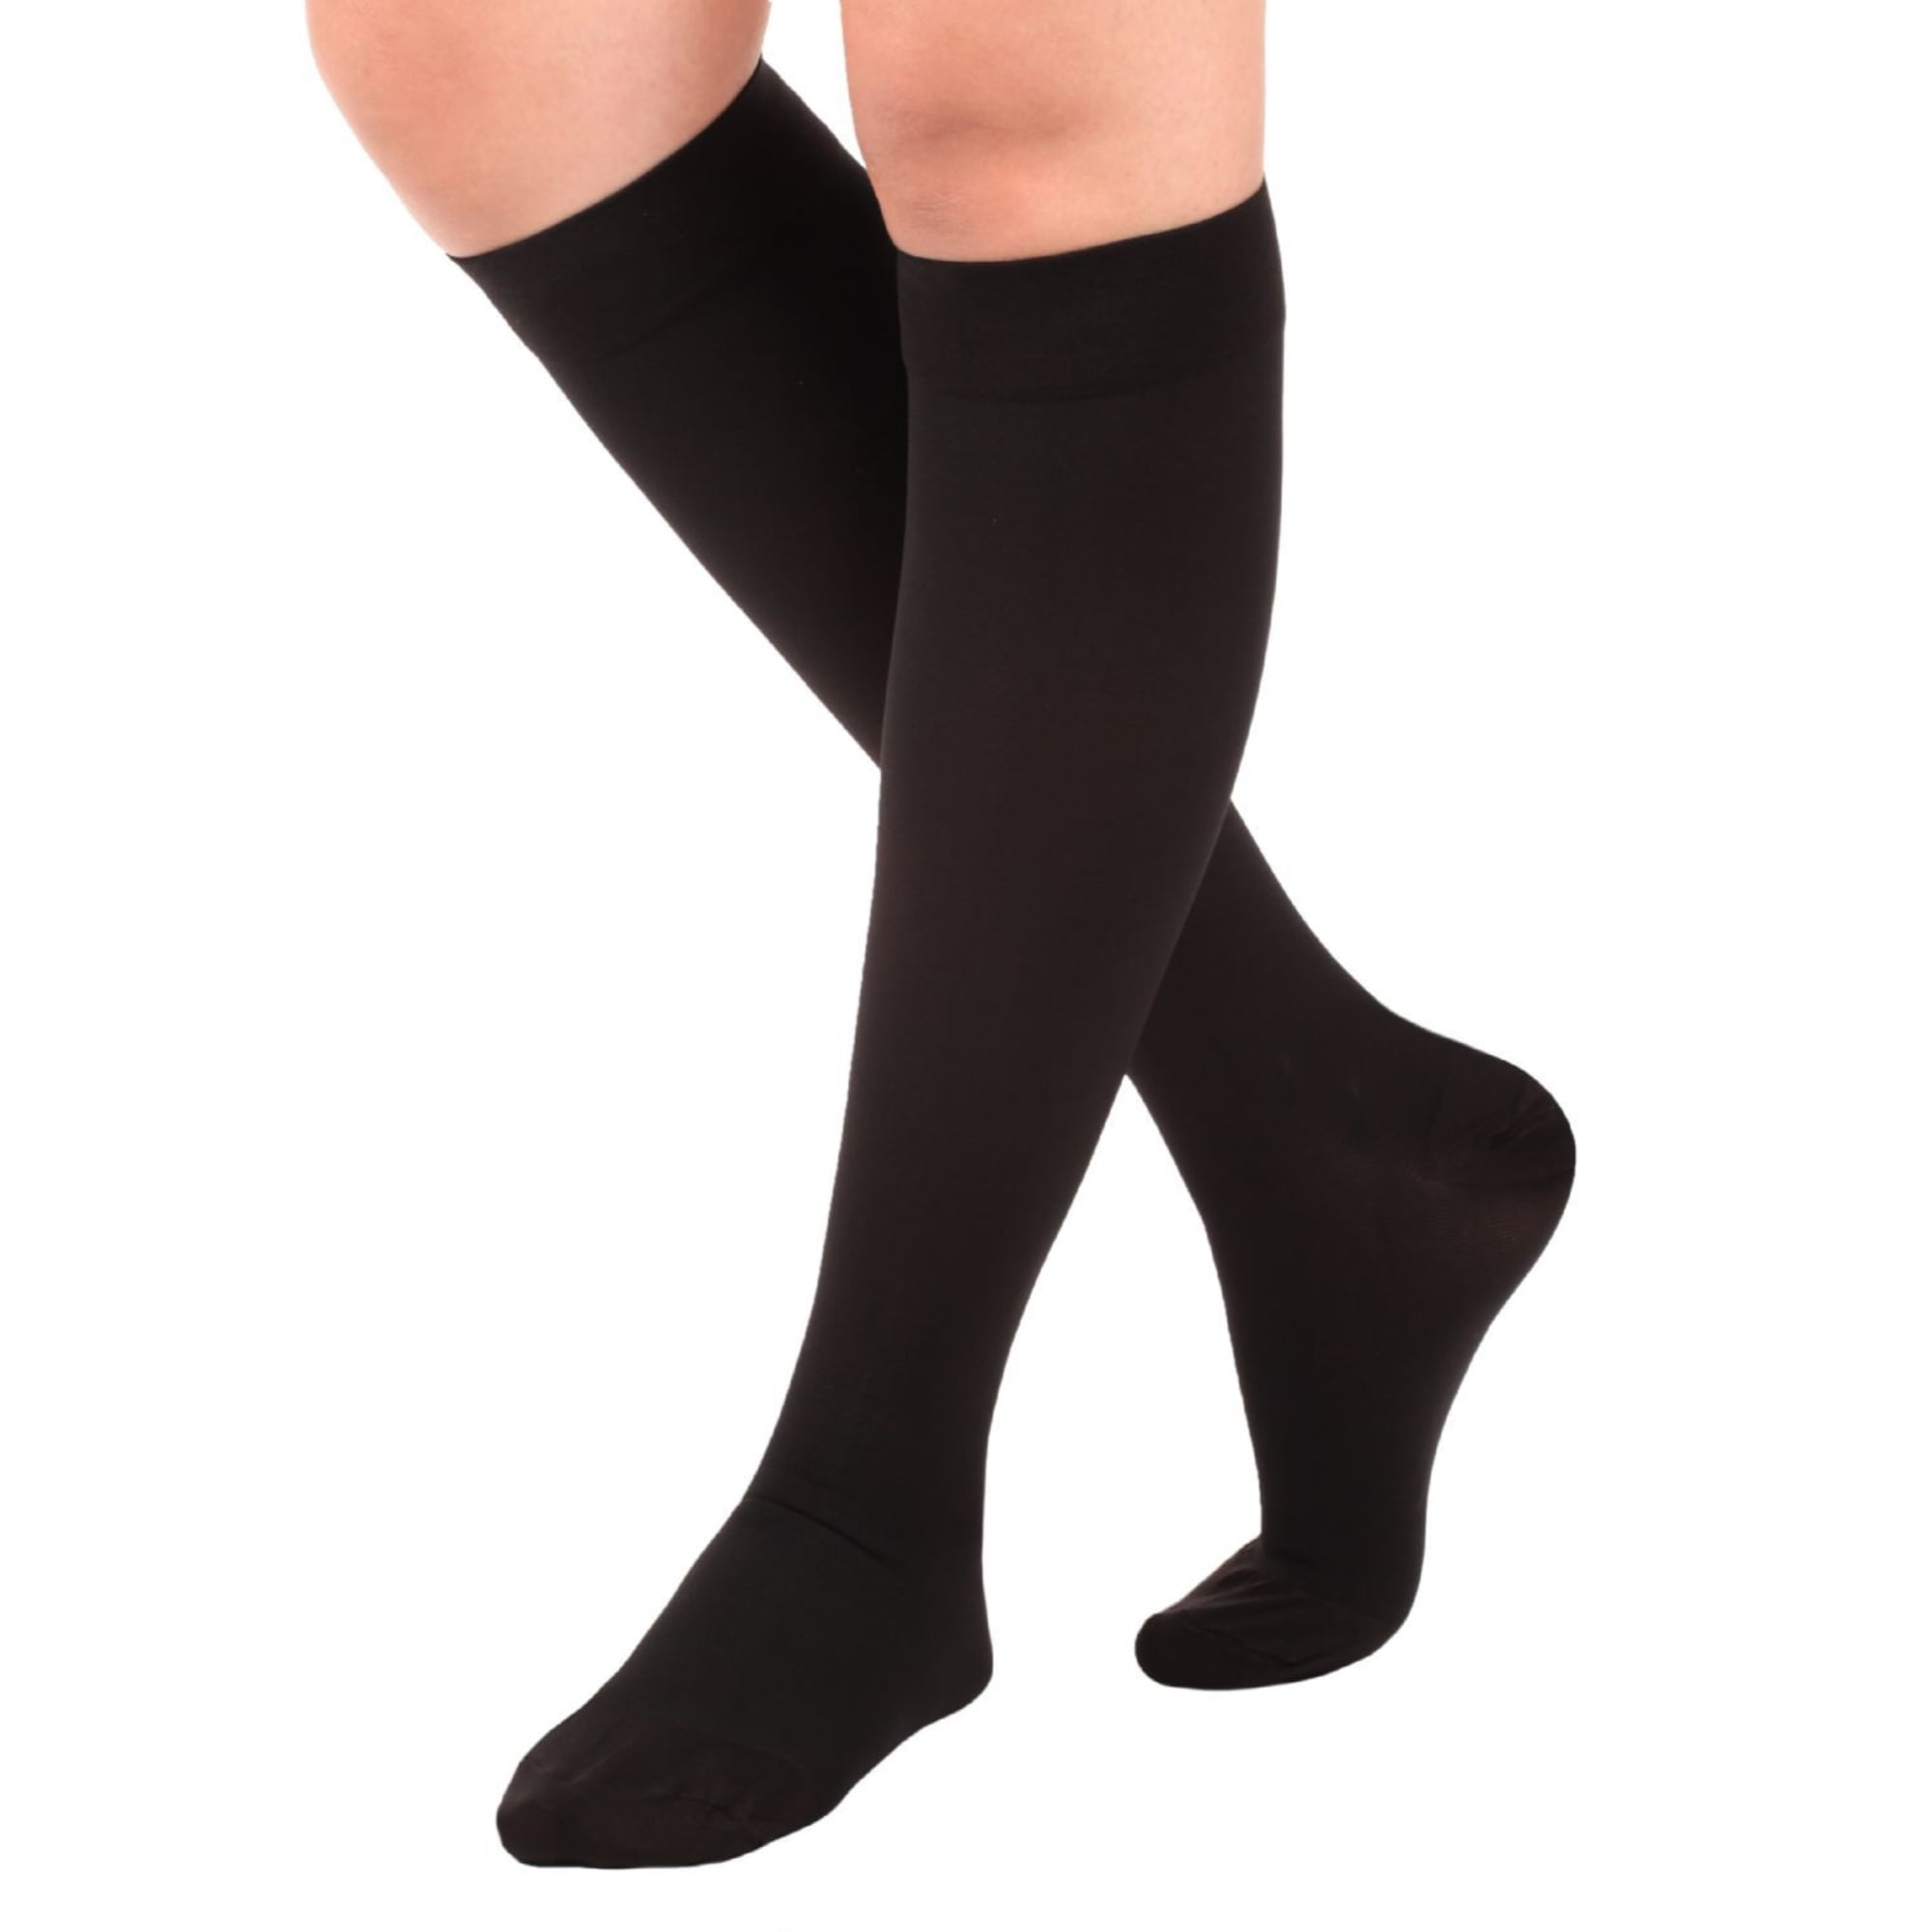 Travel compression socks knee high flight socks with lycra 